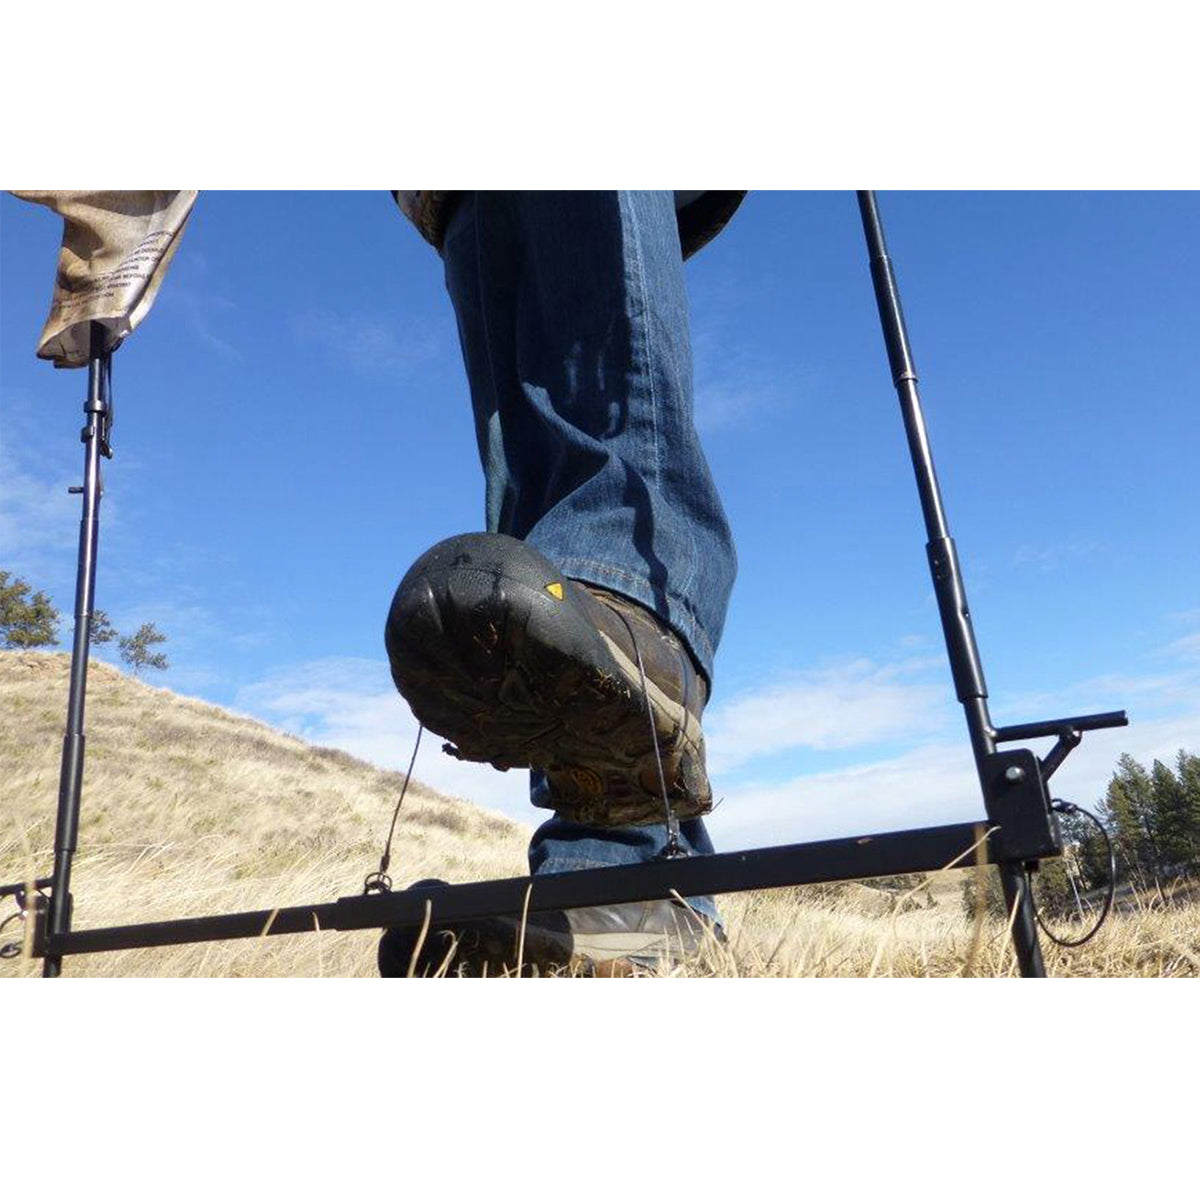 Montana Decoy Eichler Antelope Decoy in Montana Decoy Co. Eichler Antelope with Quickstand by Montana Decoy Co. | Gear - goHUNT Shop by GOHUNT | Montana Decoy Co. - GOHUNT Shop